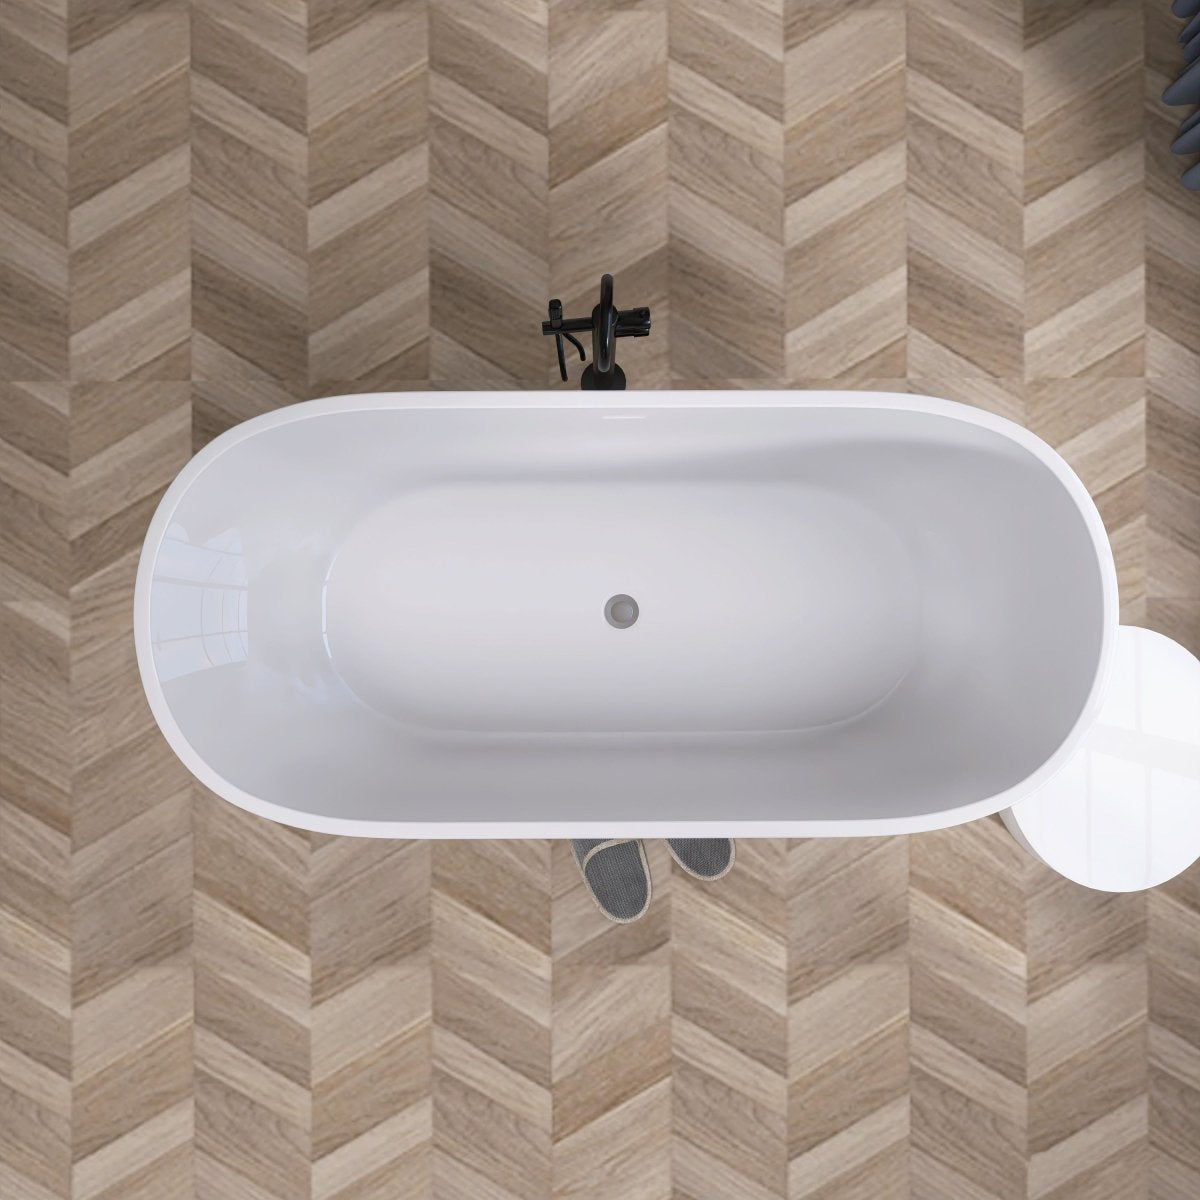 ExBrite 65" Bathroom Bathtub Acrylic Oval Shape Soaking Tub Adjustable Freestanding Anti-clogging Black